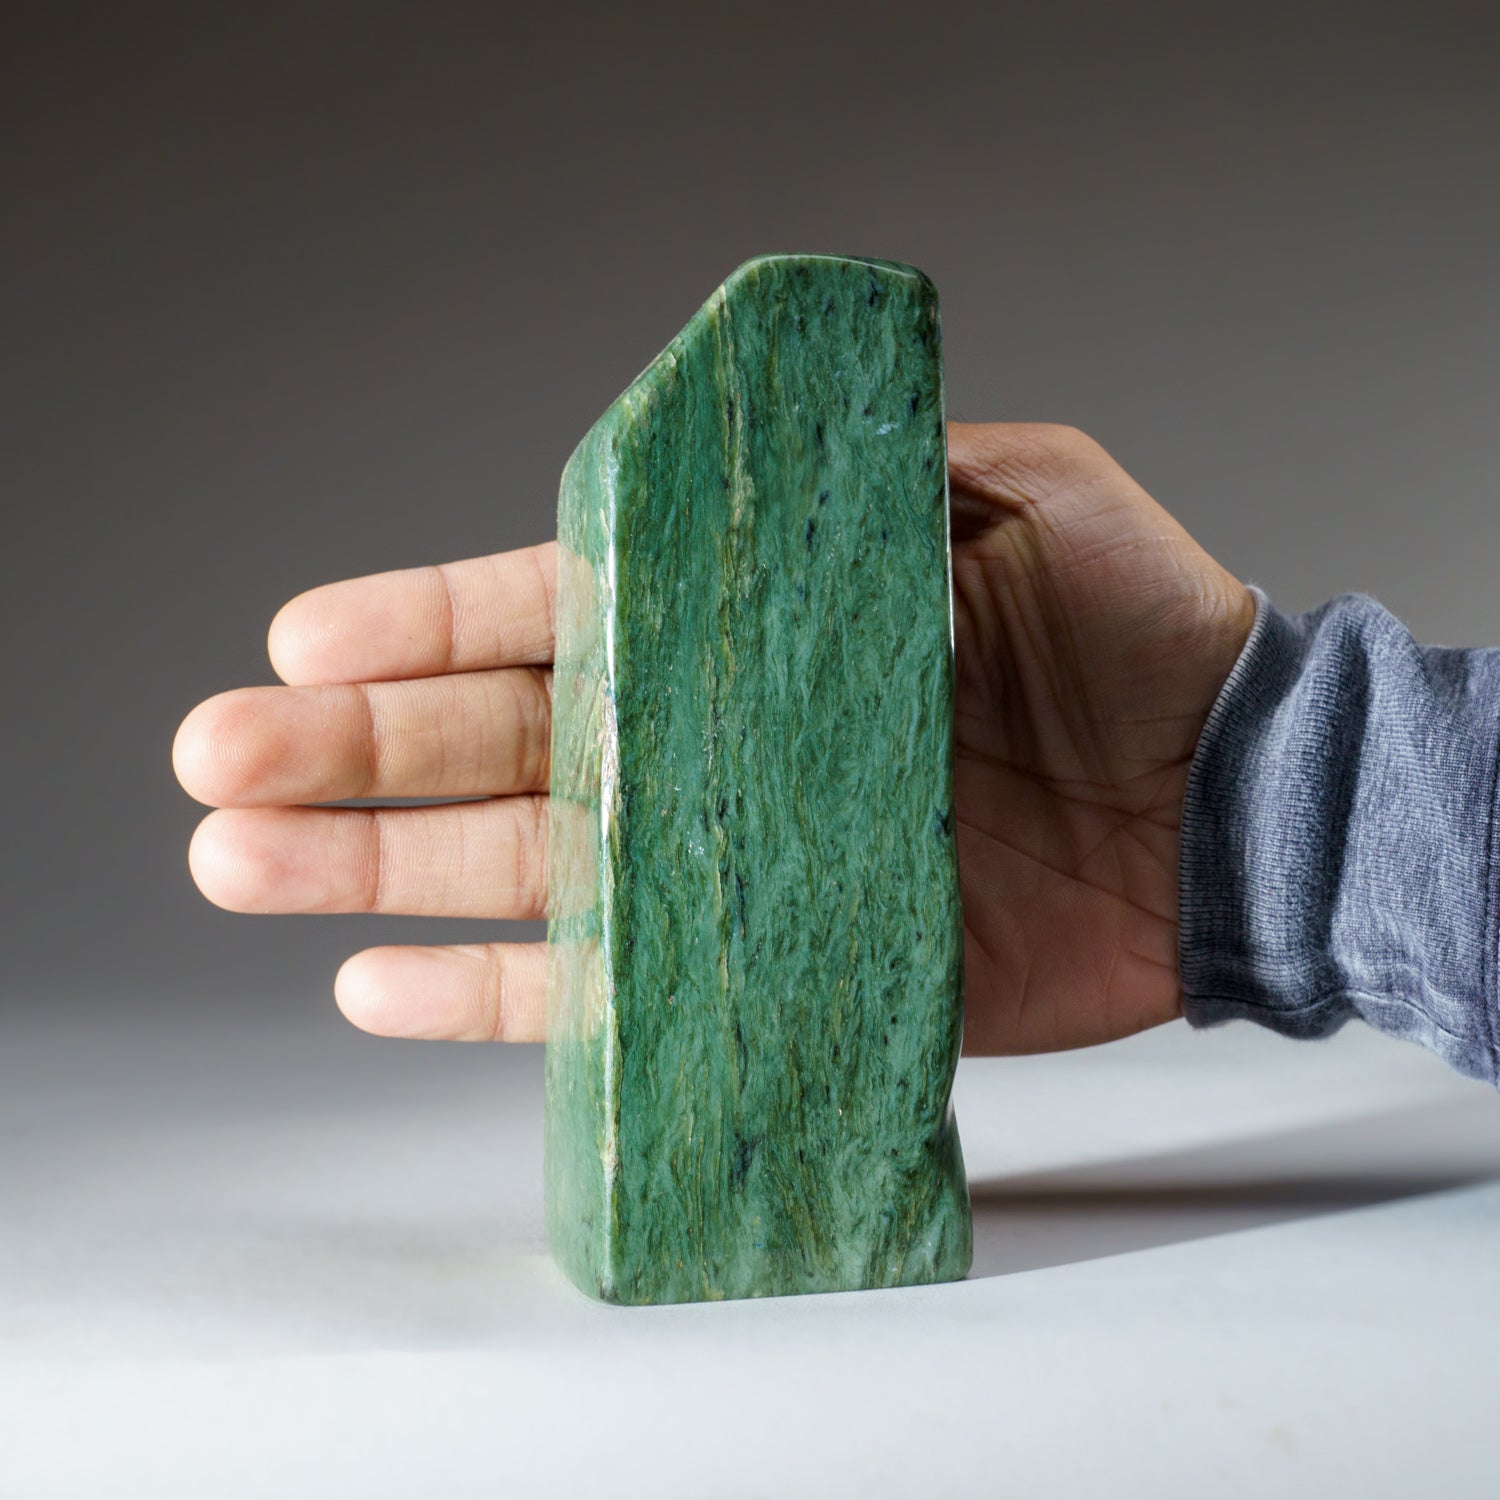 Polished Nephrite Jade Freeform from Pakistan (2.5 lbs)